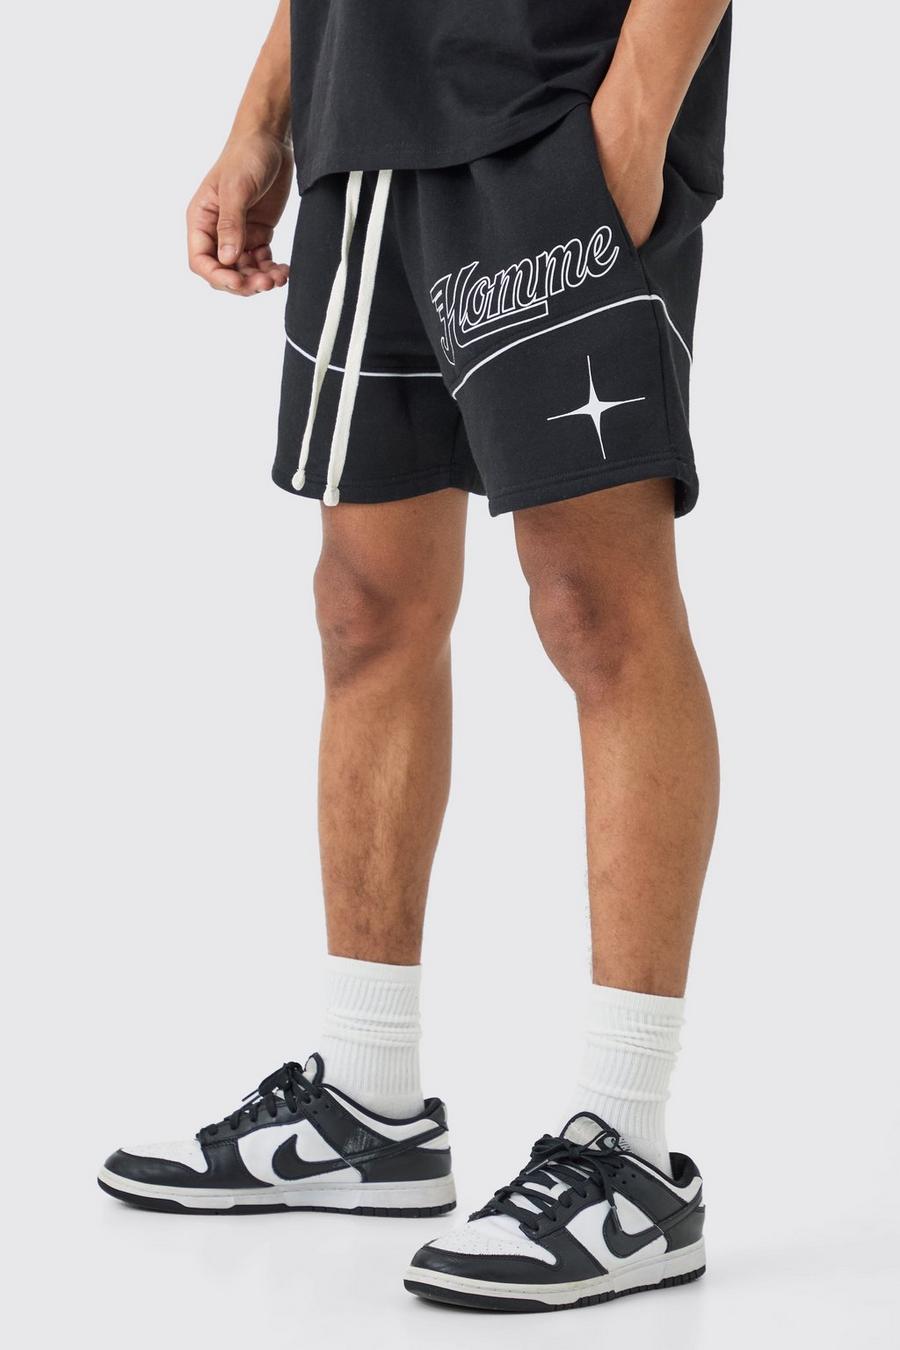 Pantalón corto holgado de vóleibol Homme, Black image number 1